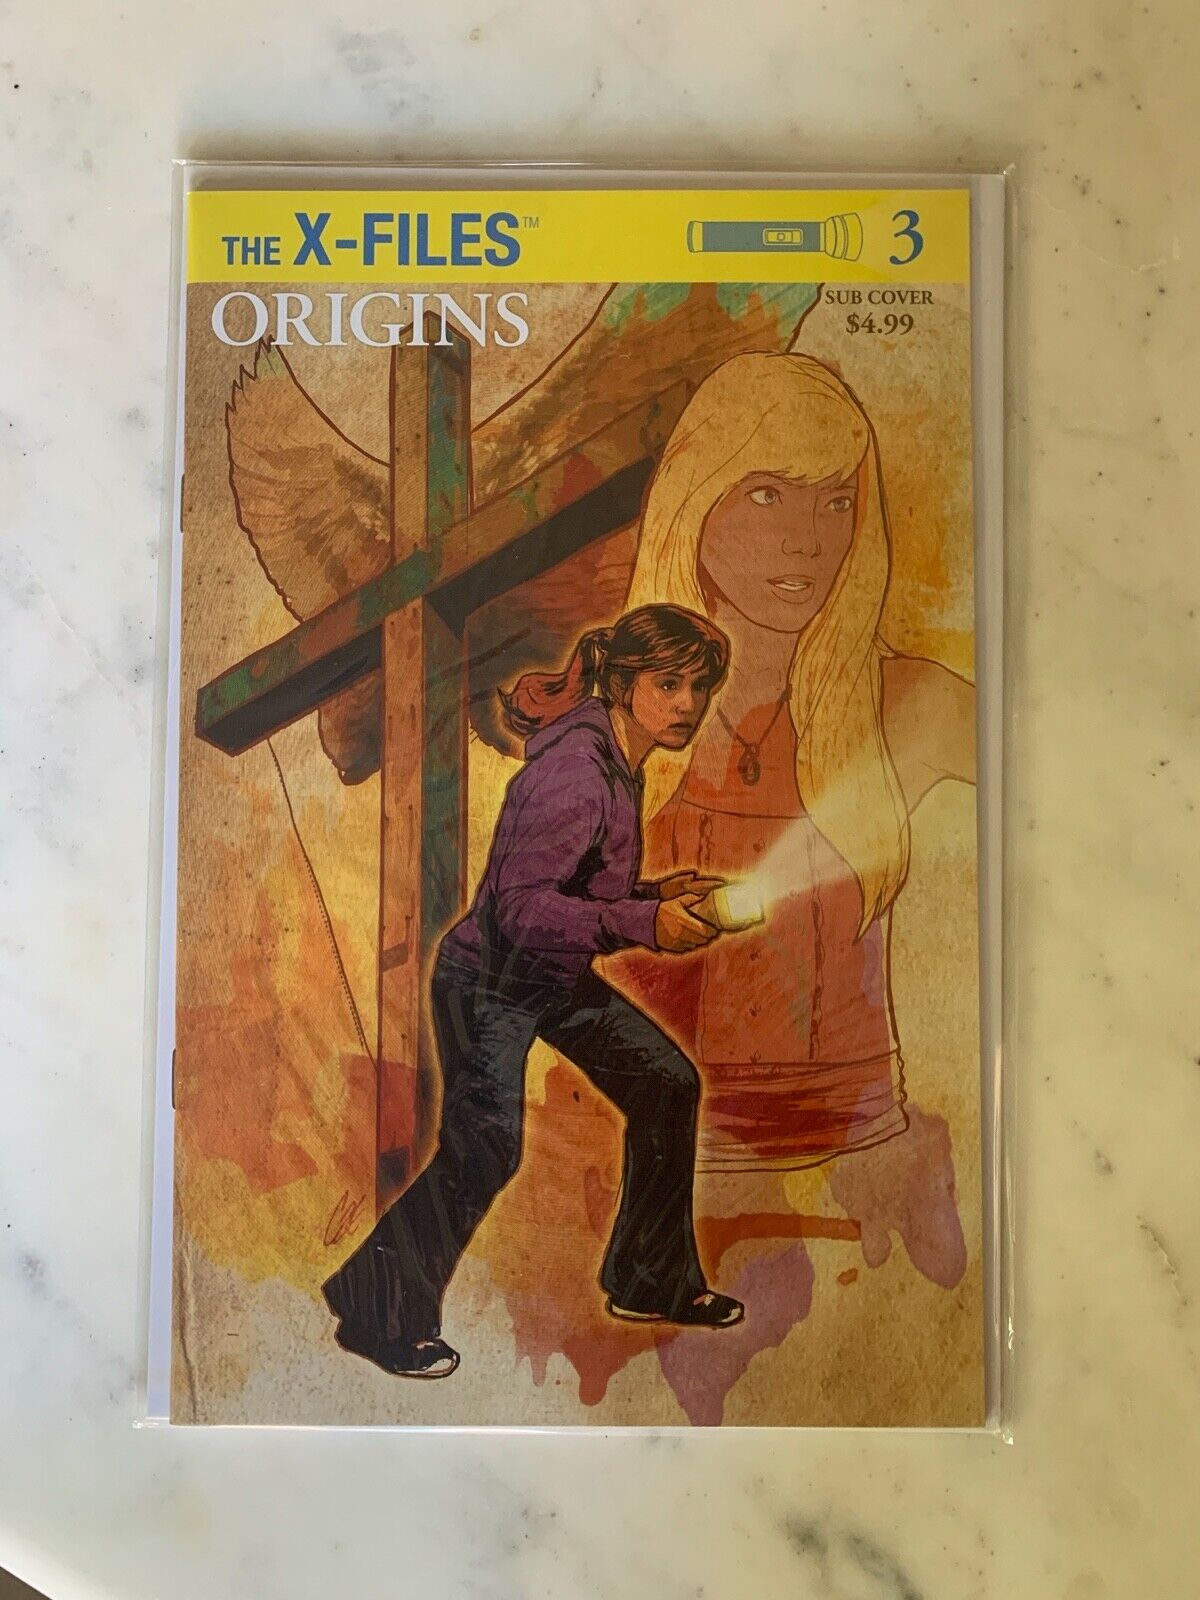 The X Files: Origins Issue 3 Sub Cover